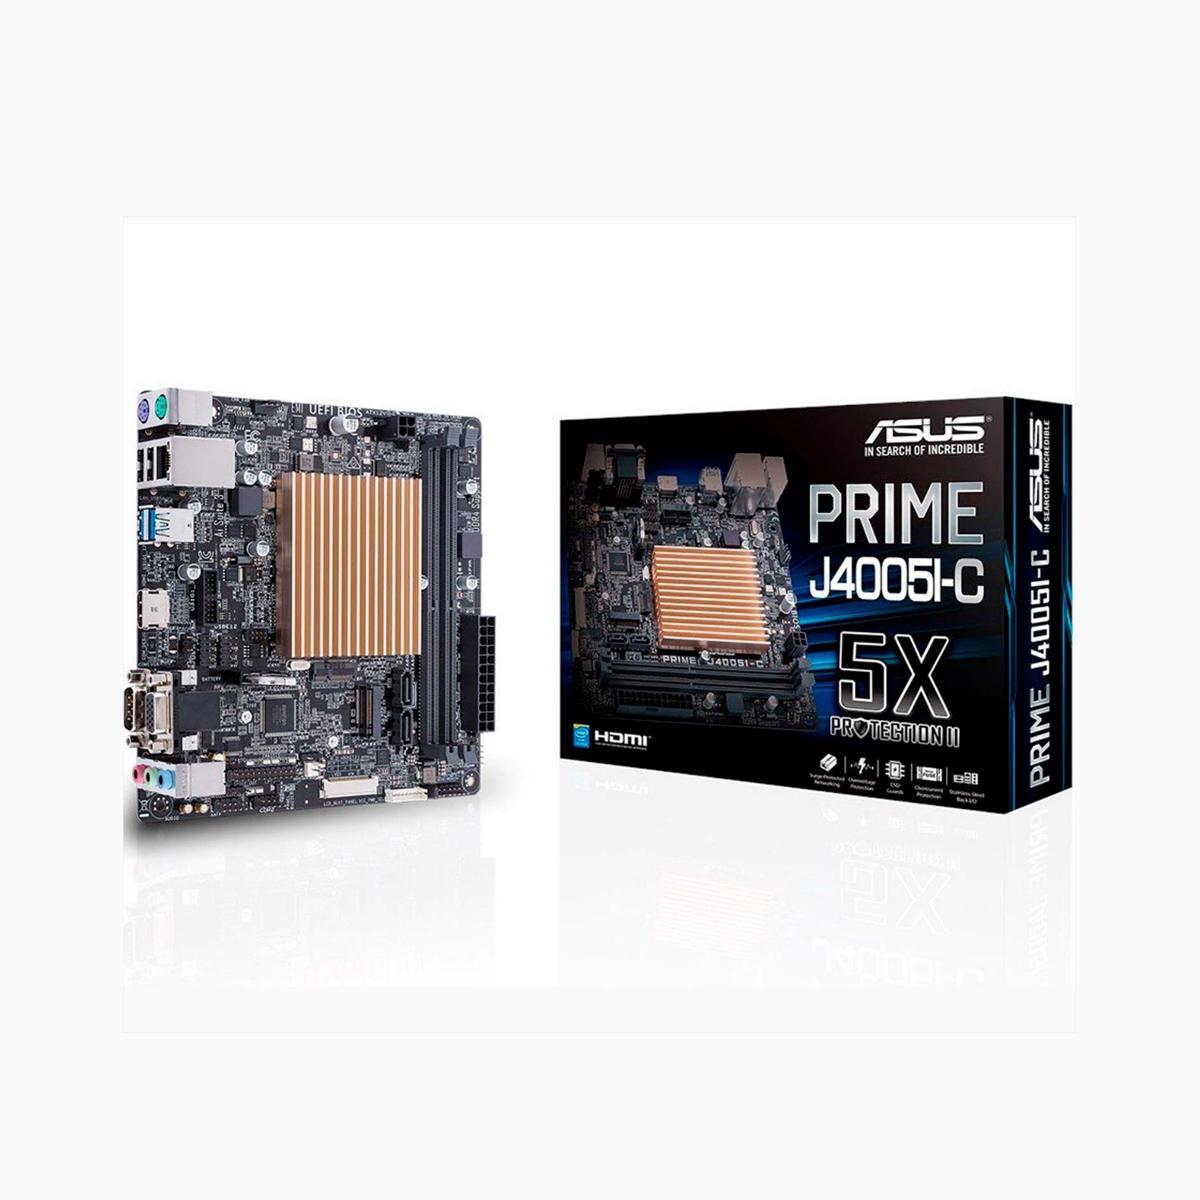 Asus Prime J4005IC  Placa Base  Thin Mini Itx  Intel Celeron J4005  Usb 31 Gen 1  Gigabit Lan  Grficos En La Placa  Hd Audio 8Canales - PRIME J4005I-C